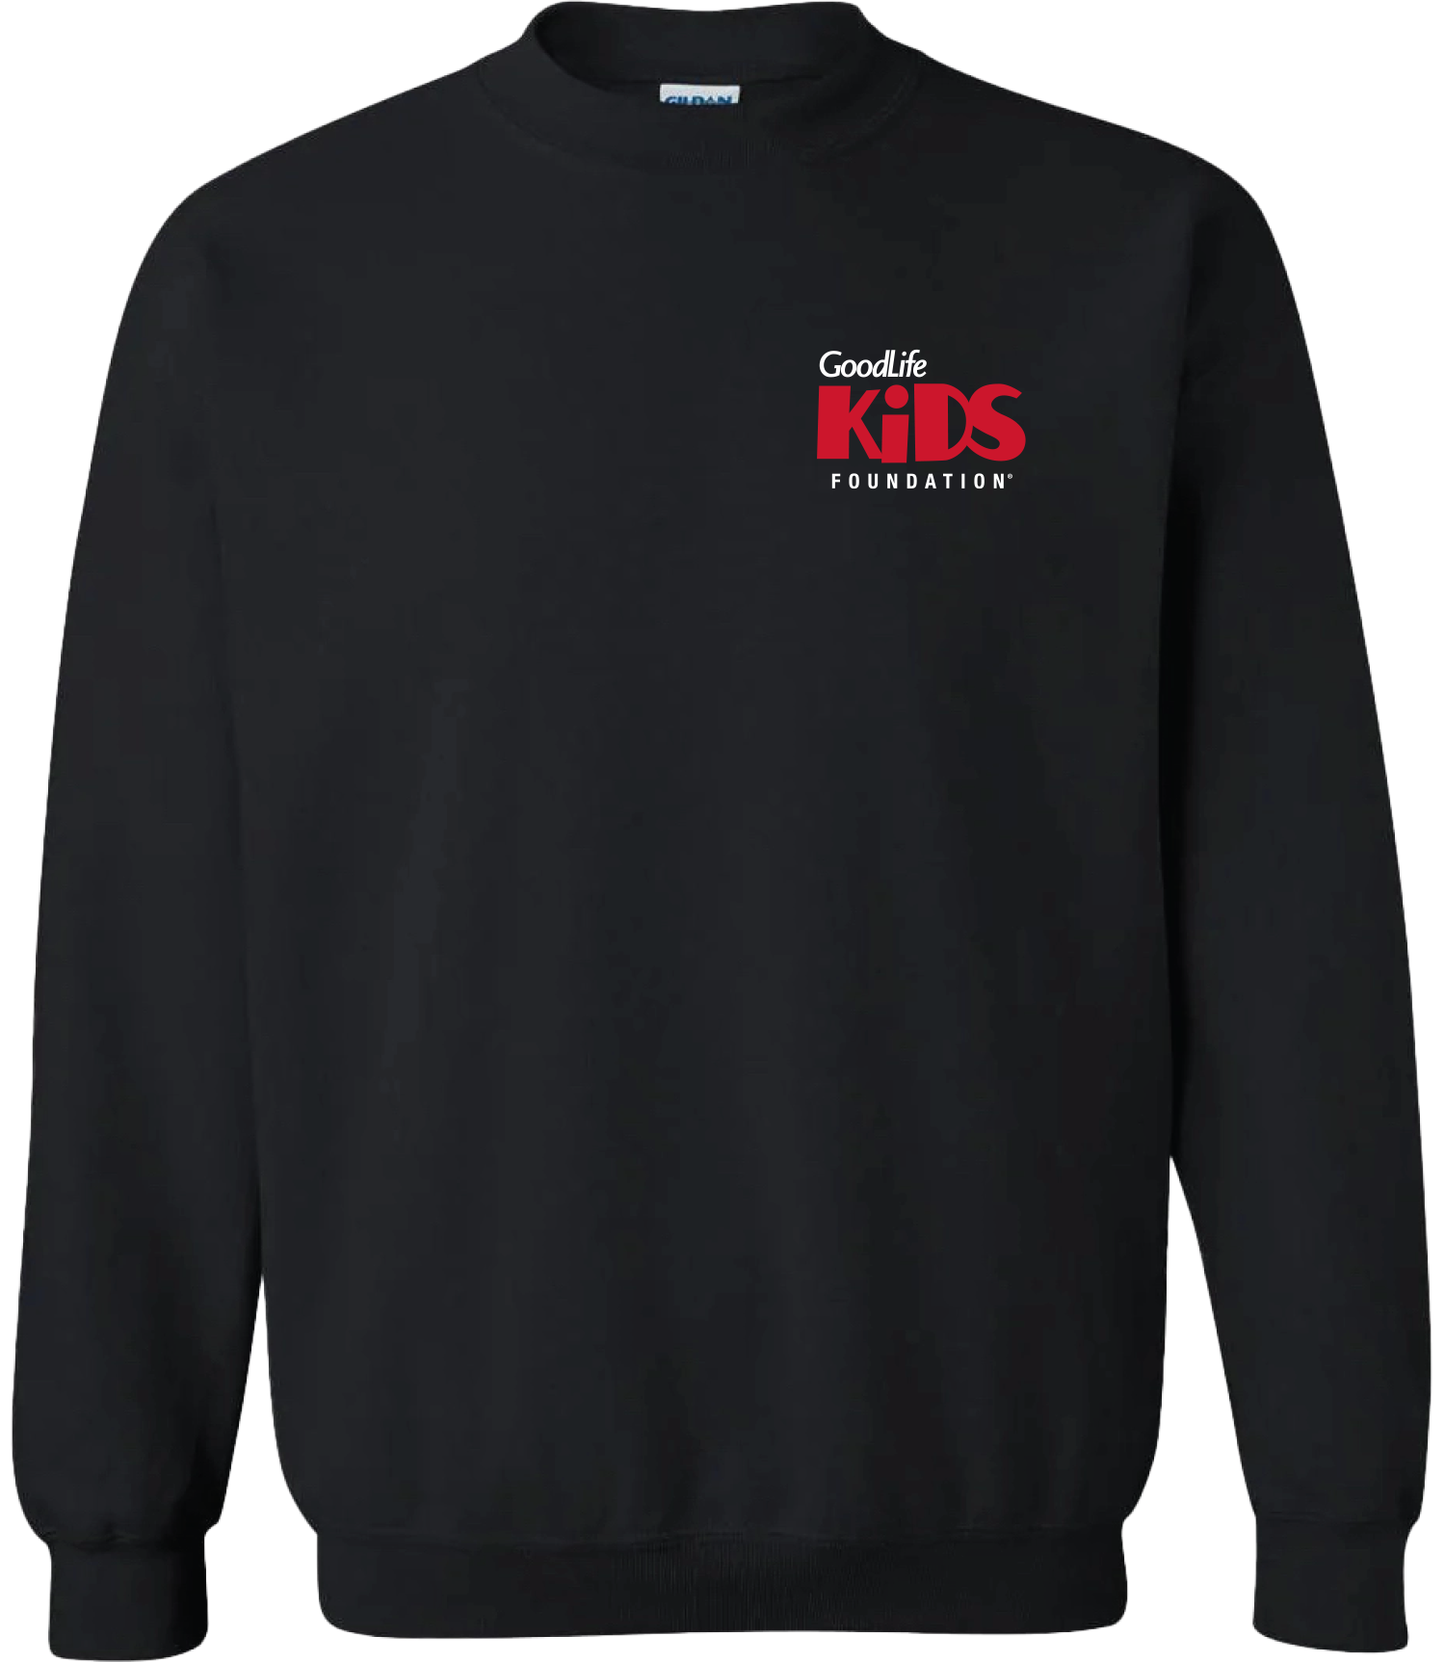 GoodLife Kids Foundation Unisex Crewneck Sweatshirt